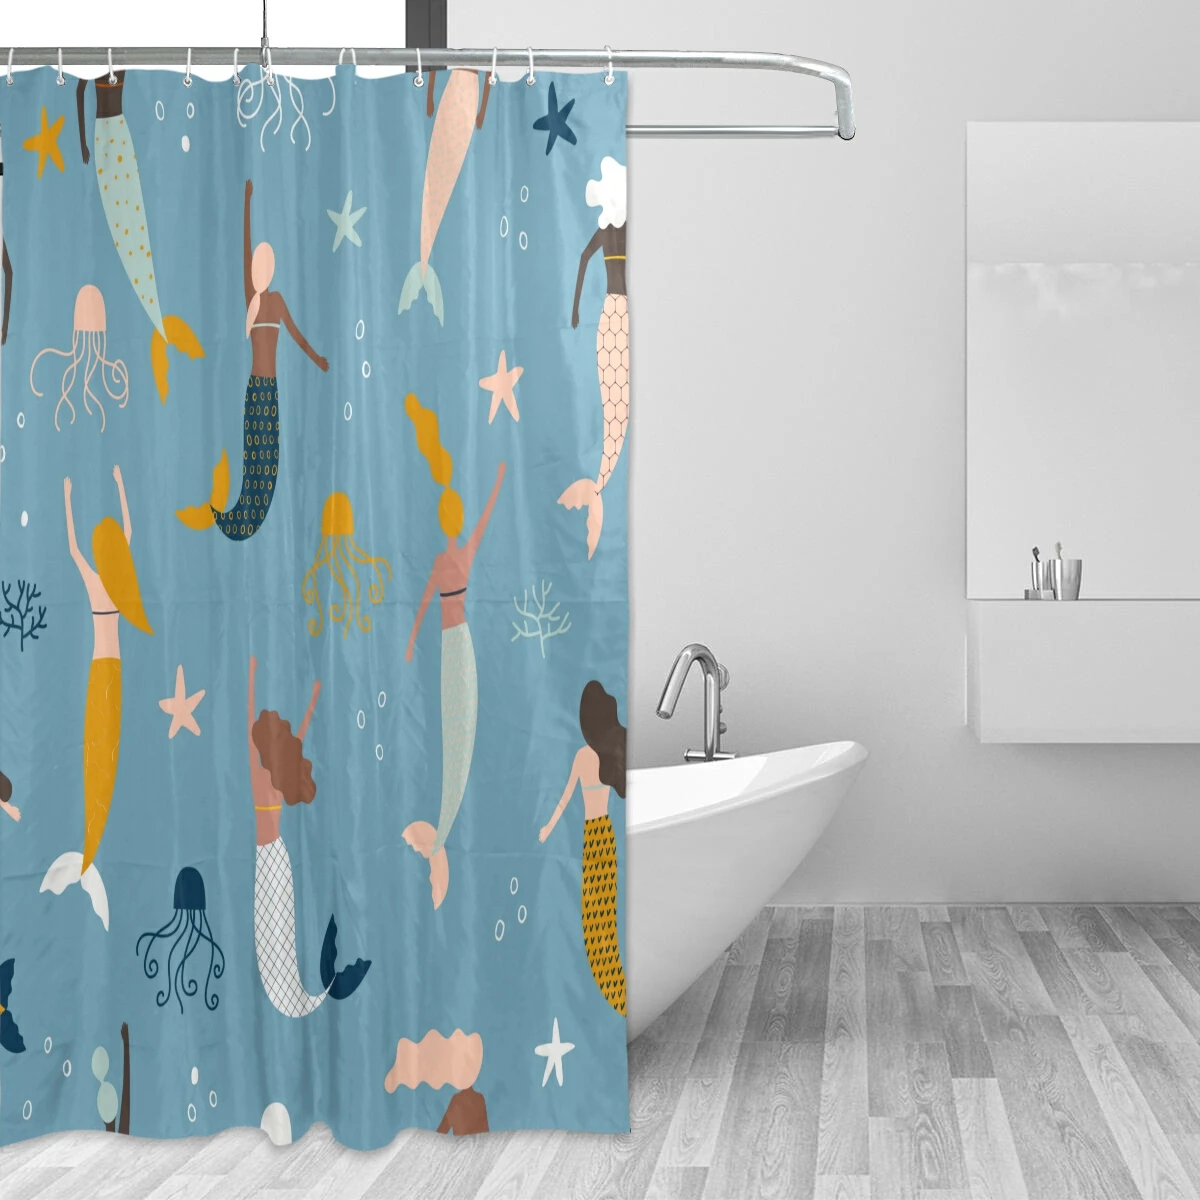 Cartoon Underwater Animal Bathroom Waterproof Fabric Mildew Shower Curtain Hooks 